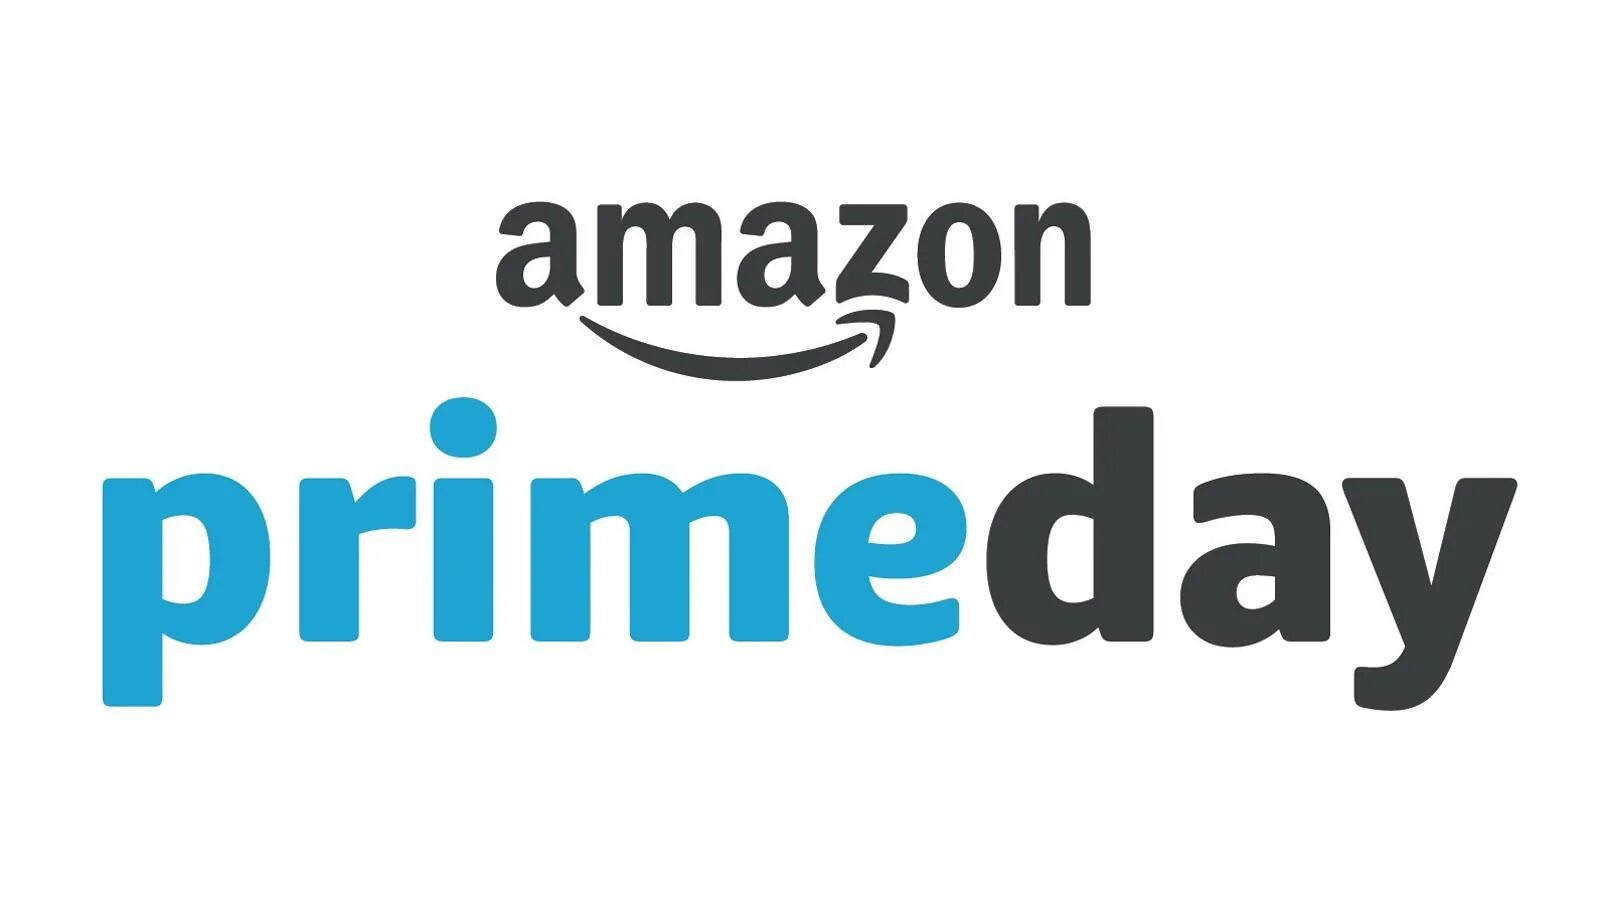 Amazon prime купить. Amazon Prime Day. Amazon Prime logo. Prime Day Amazon logo. Amazon Prime, Amazon web services.